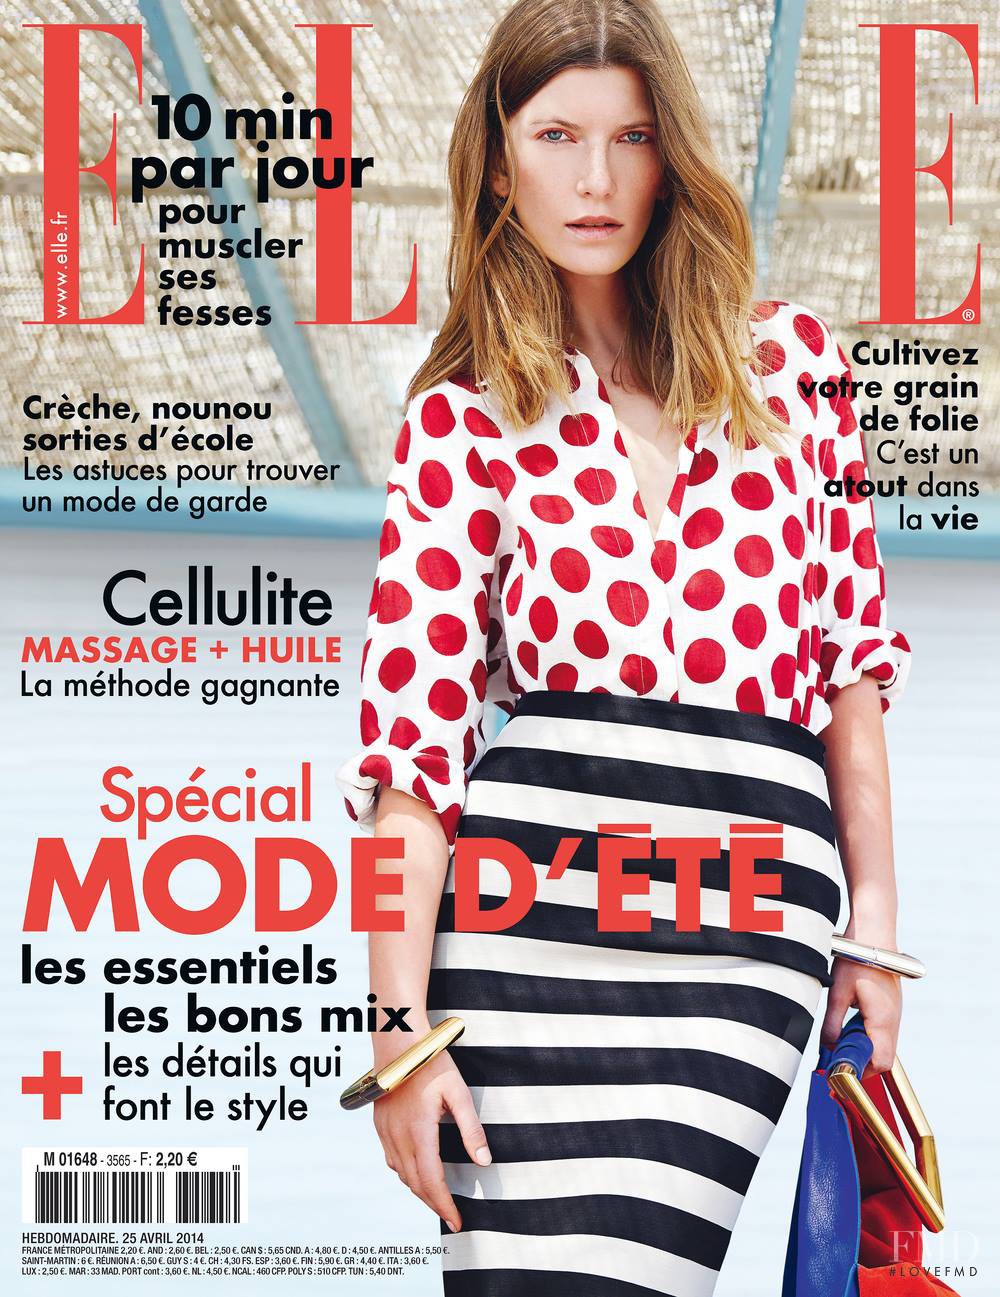 La magazine. Elle. Les Modes журнал. Elle Франция журнал молодая модель.